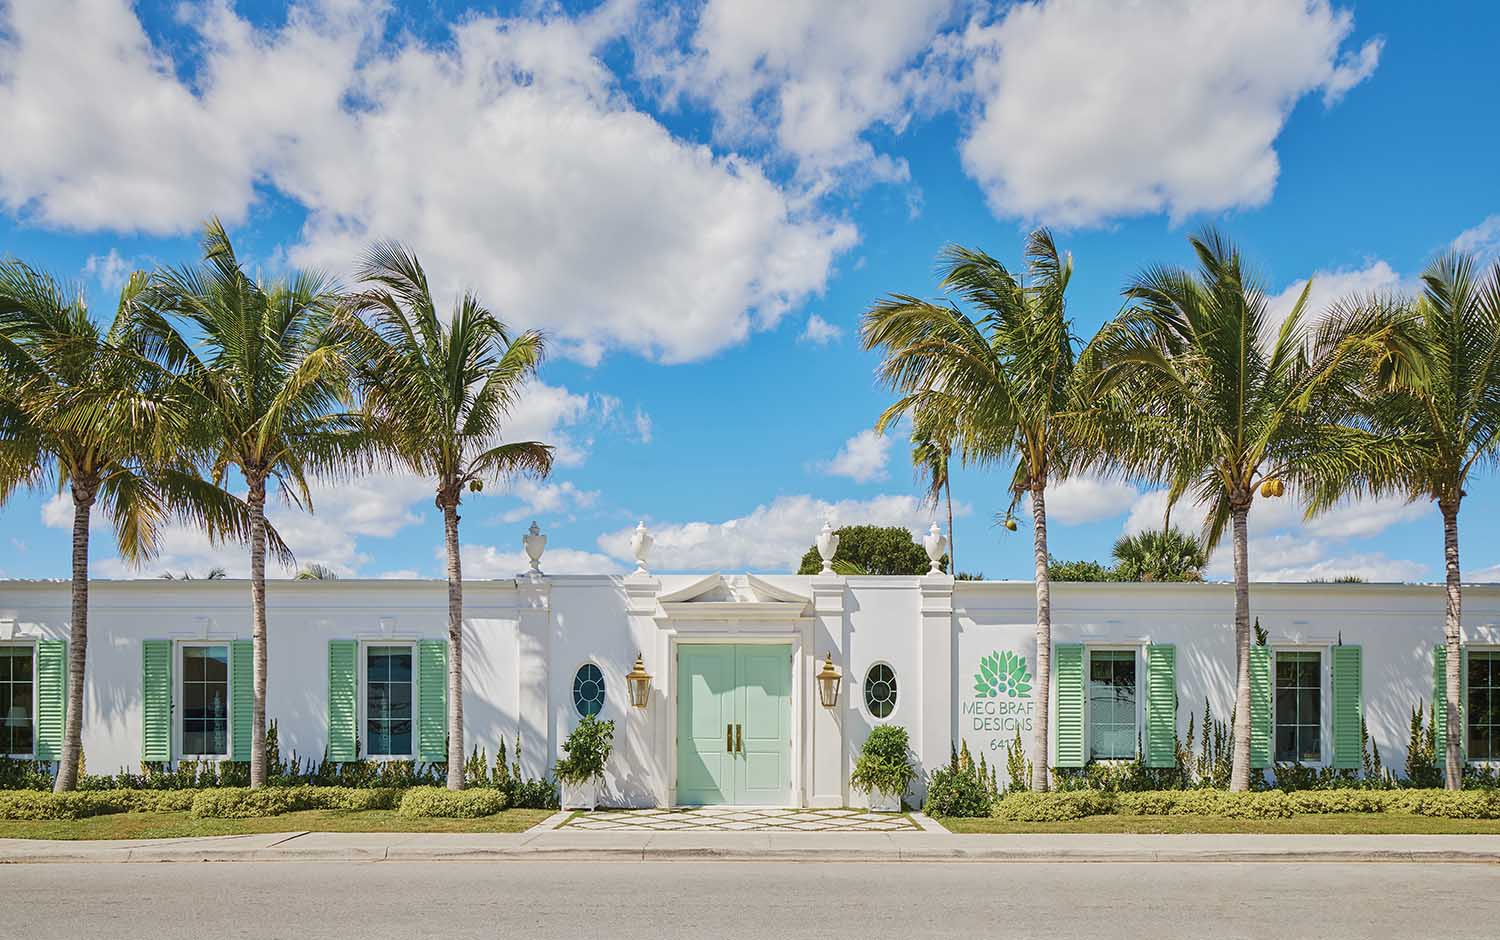 Ralph Lauren Celebrates New Miami Design District Store in Coastal